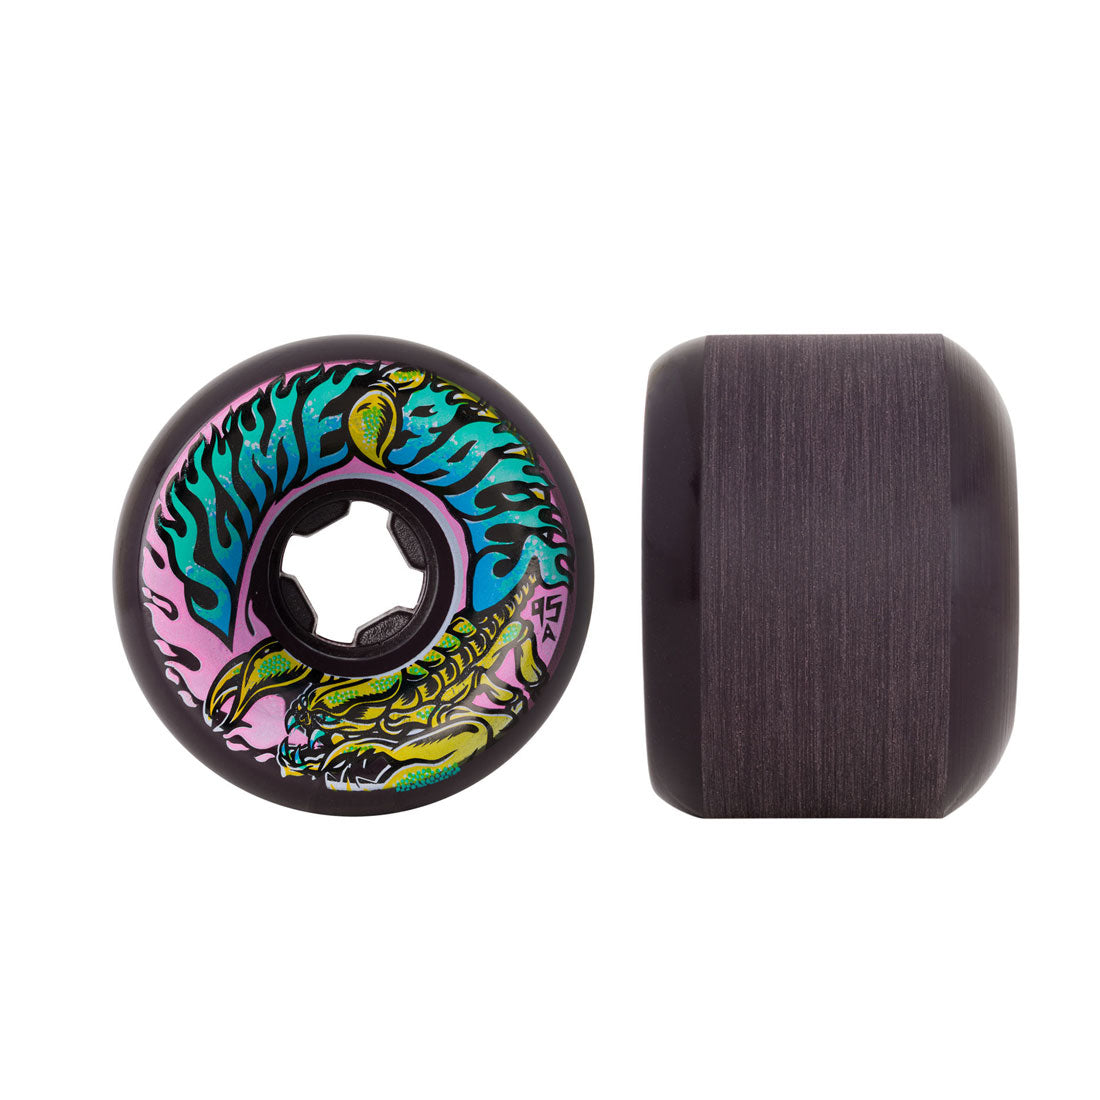 Slime Balls Goooberz Vomits 95A Skateboard Wheels - Black - 60mm